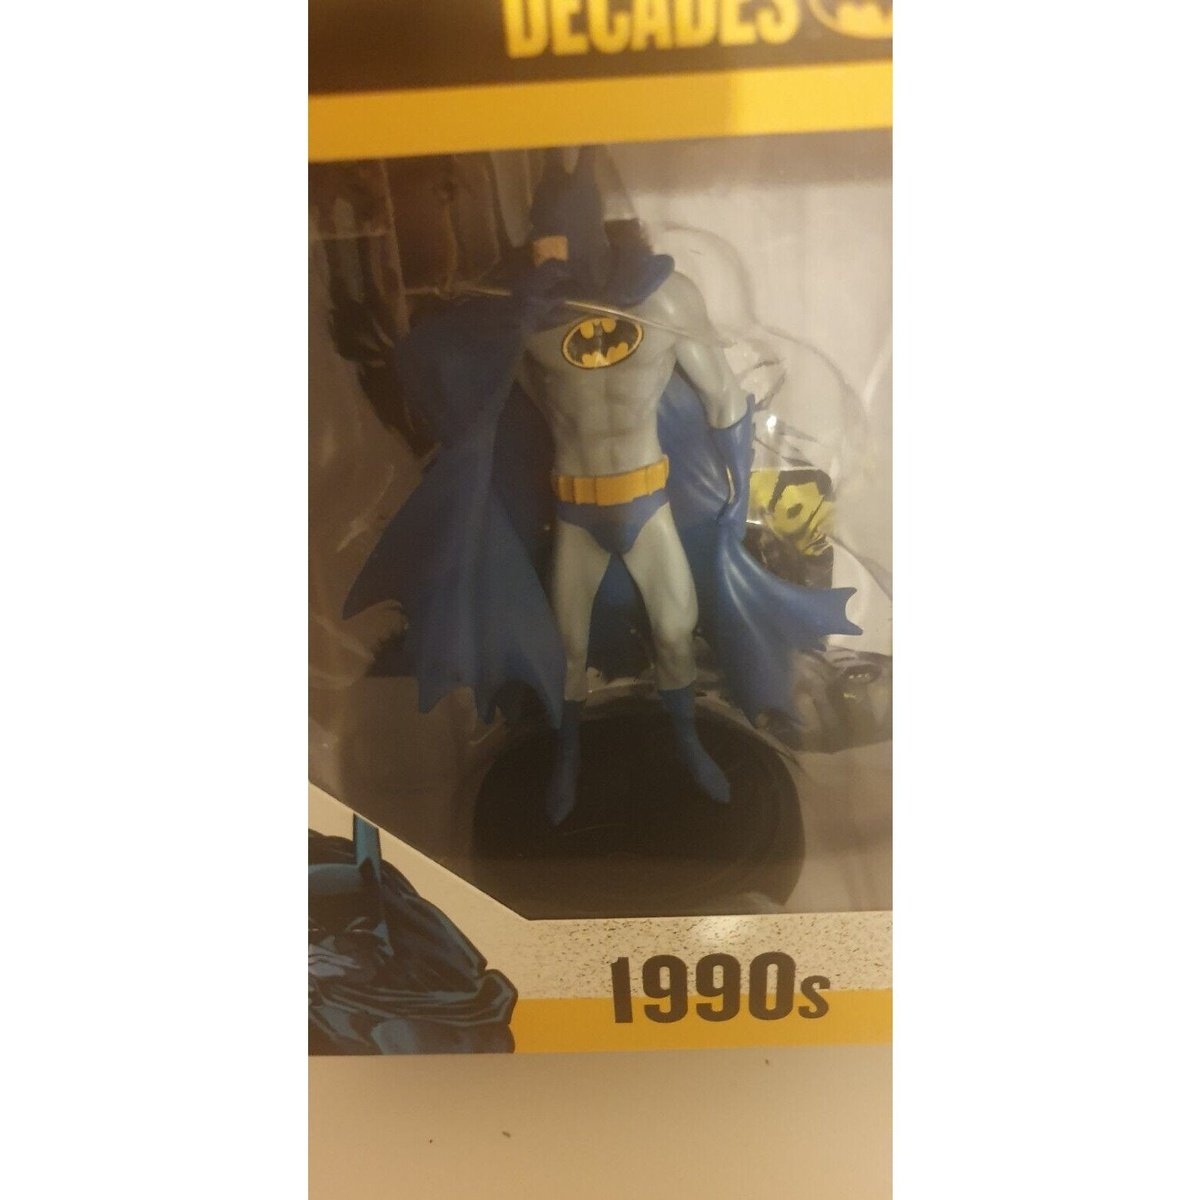 Figurine batman Decades 1990